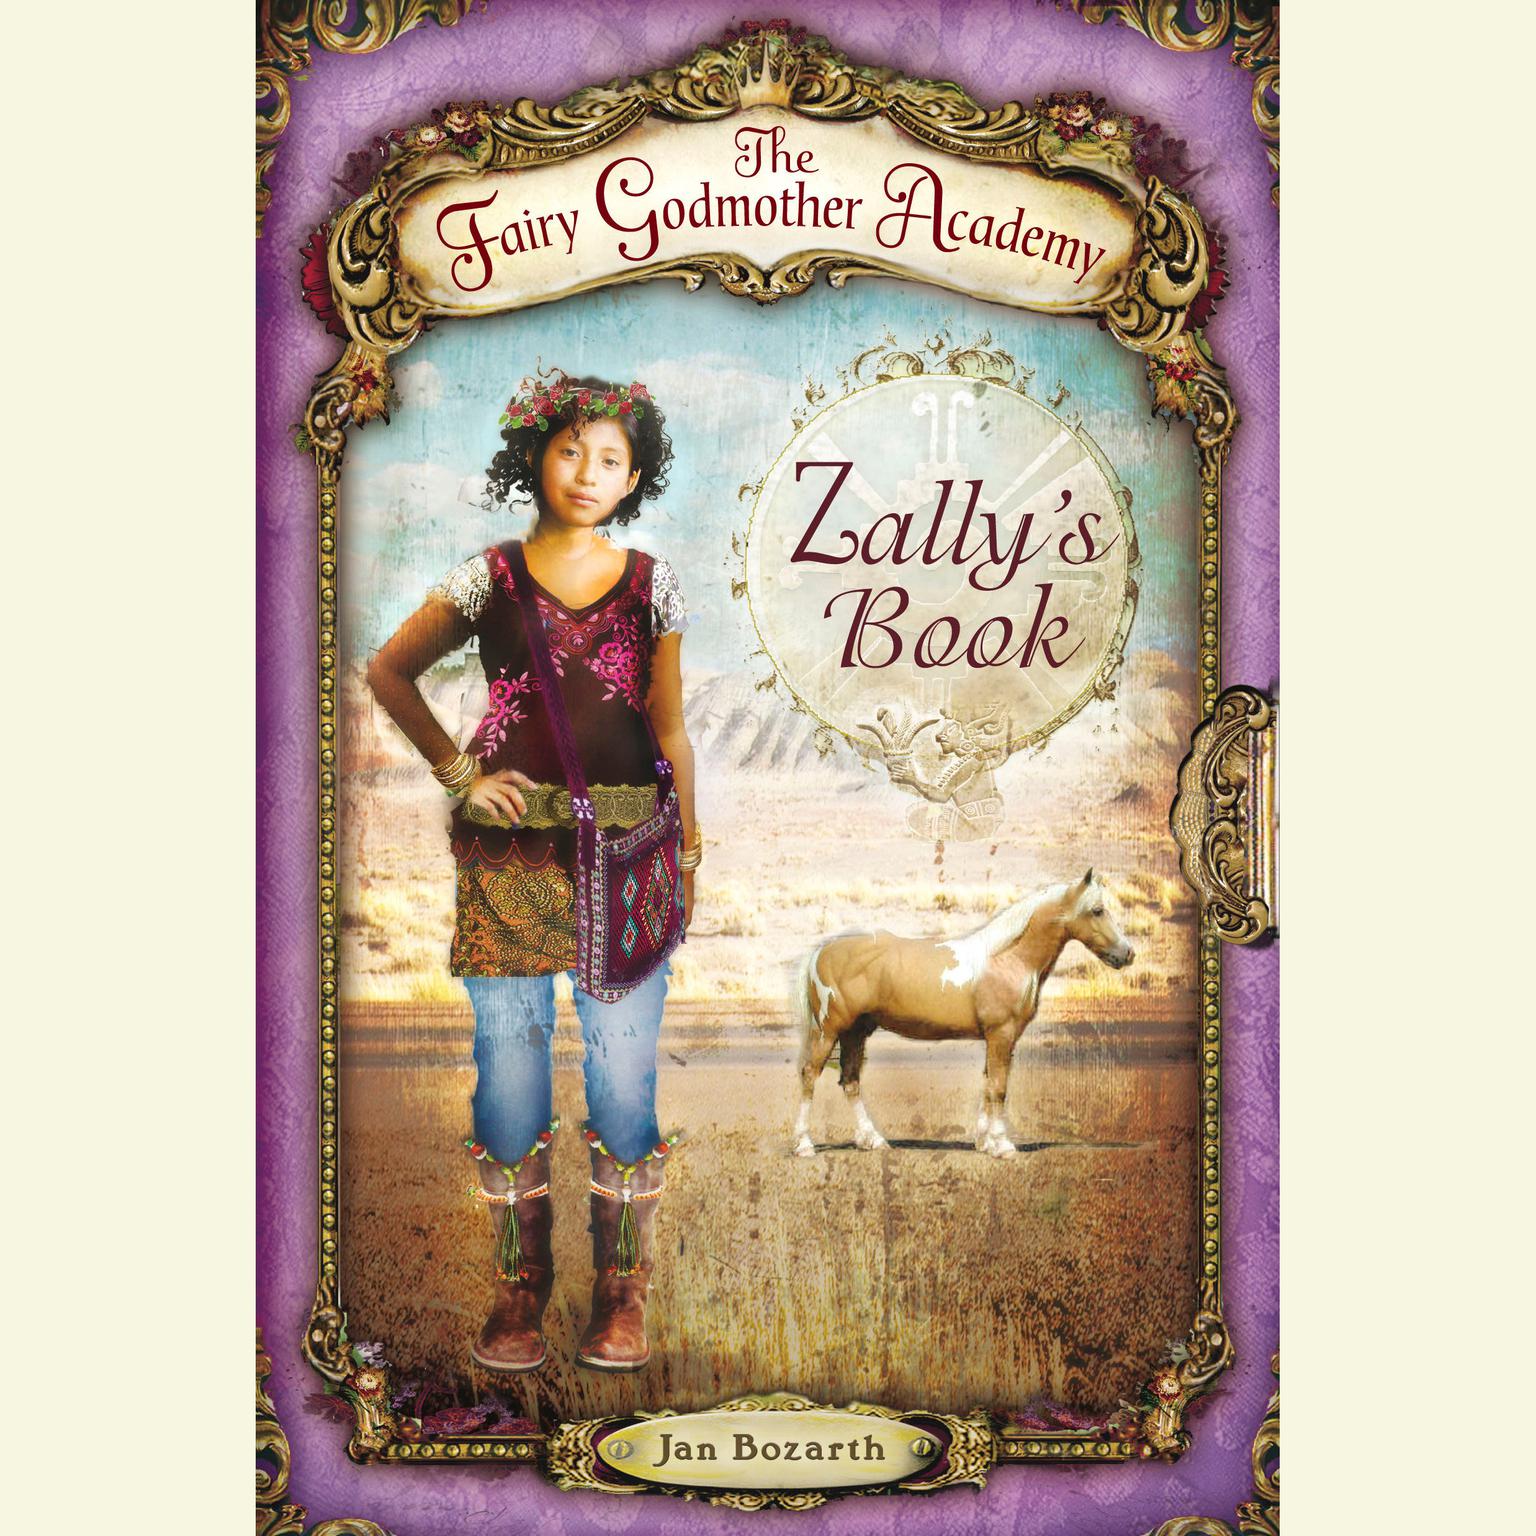 The Fairy Godmother Academy #3: Zallys Book Audiobook, by Jan Bozarth